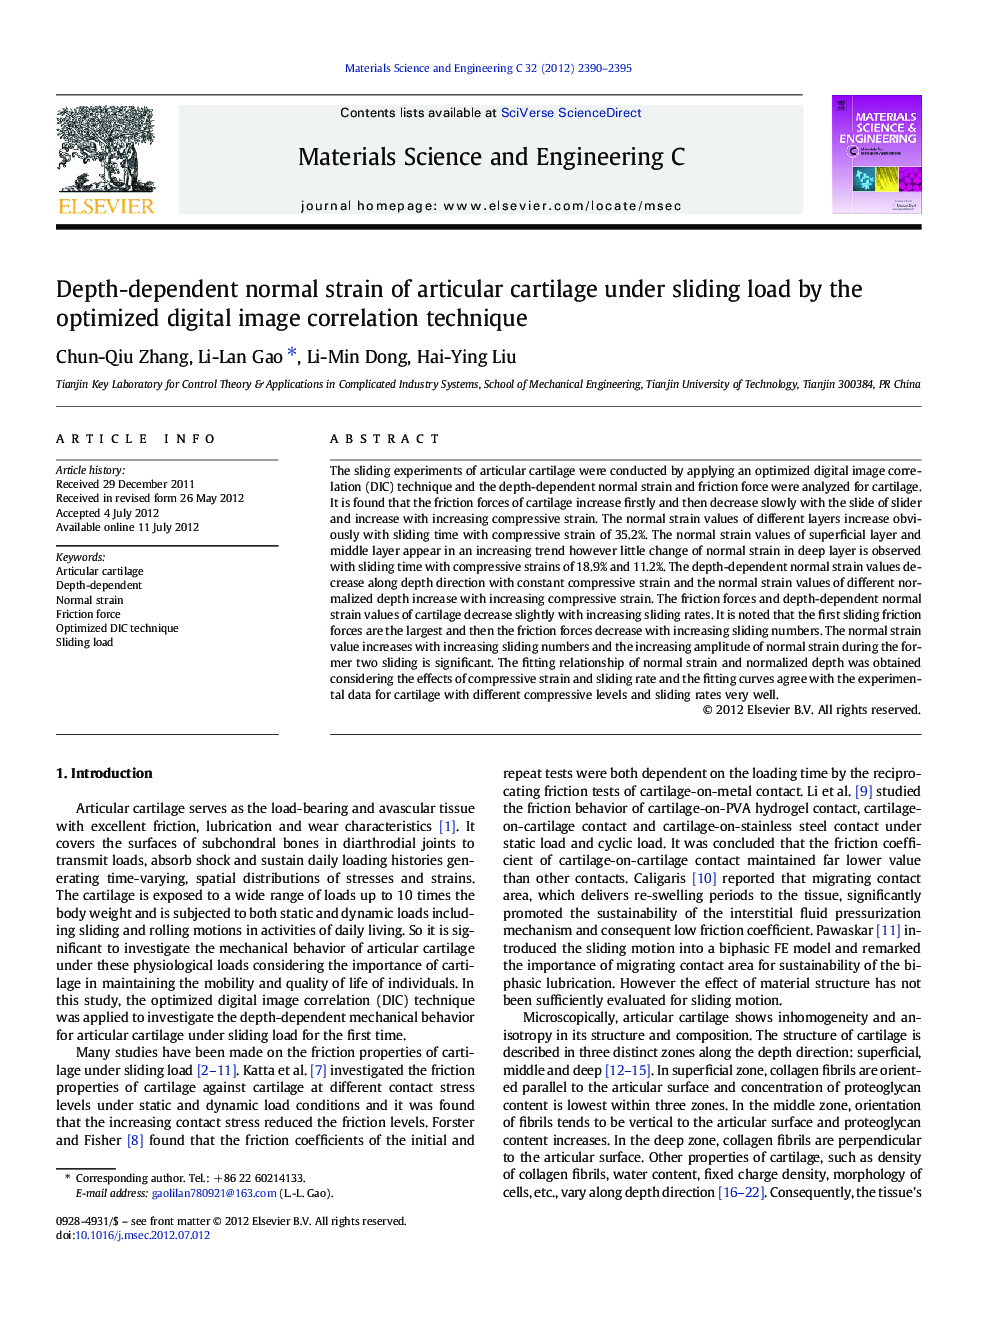 Depth-dependent normal strain of articular cartilage under sliding load by the optimized digital image correlation technique